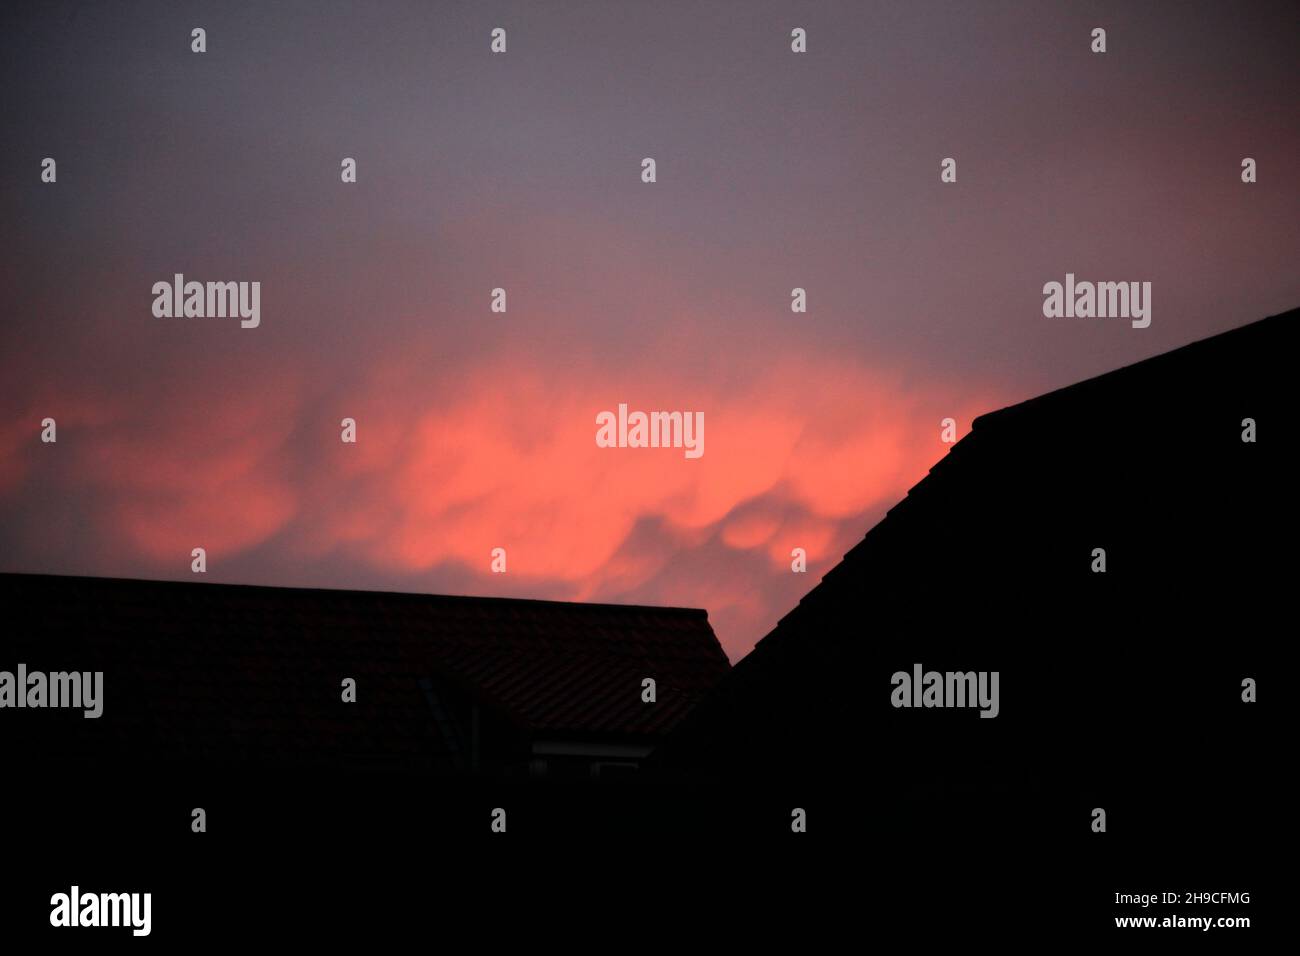 Yorkshire Sonnenaufgang - roter Himmel am Morgen Englische Volkskunde Wetterprognose Dezember Winter 2021 Stockfoto